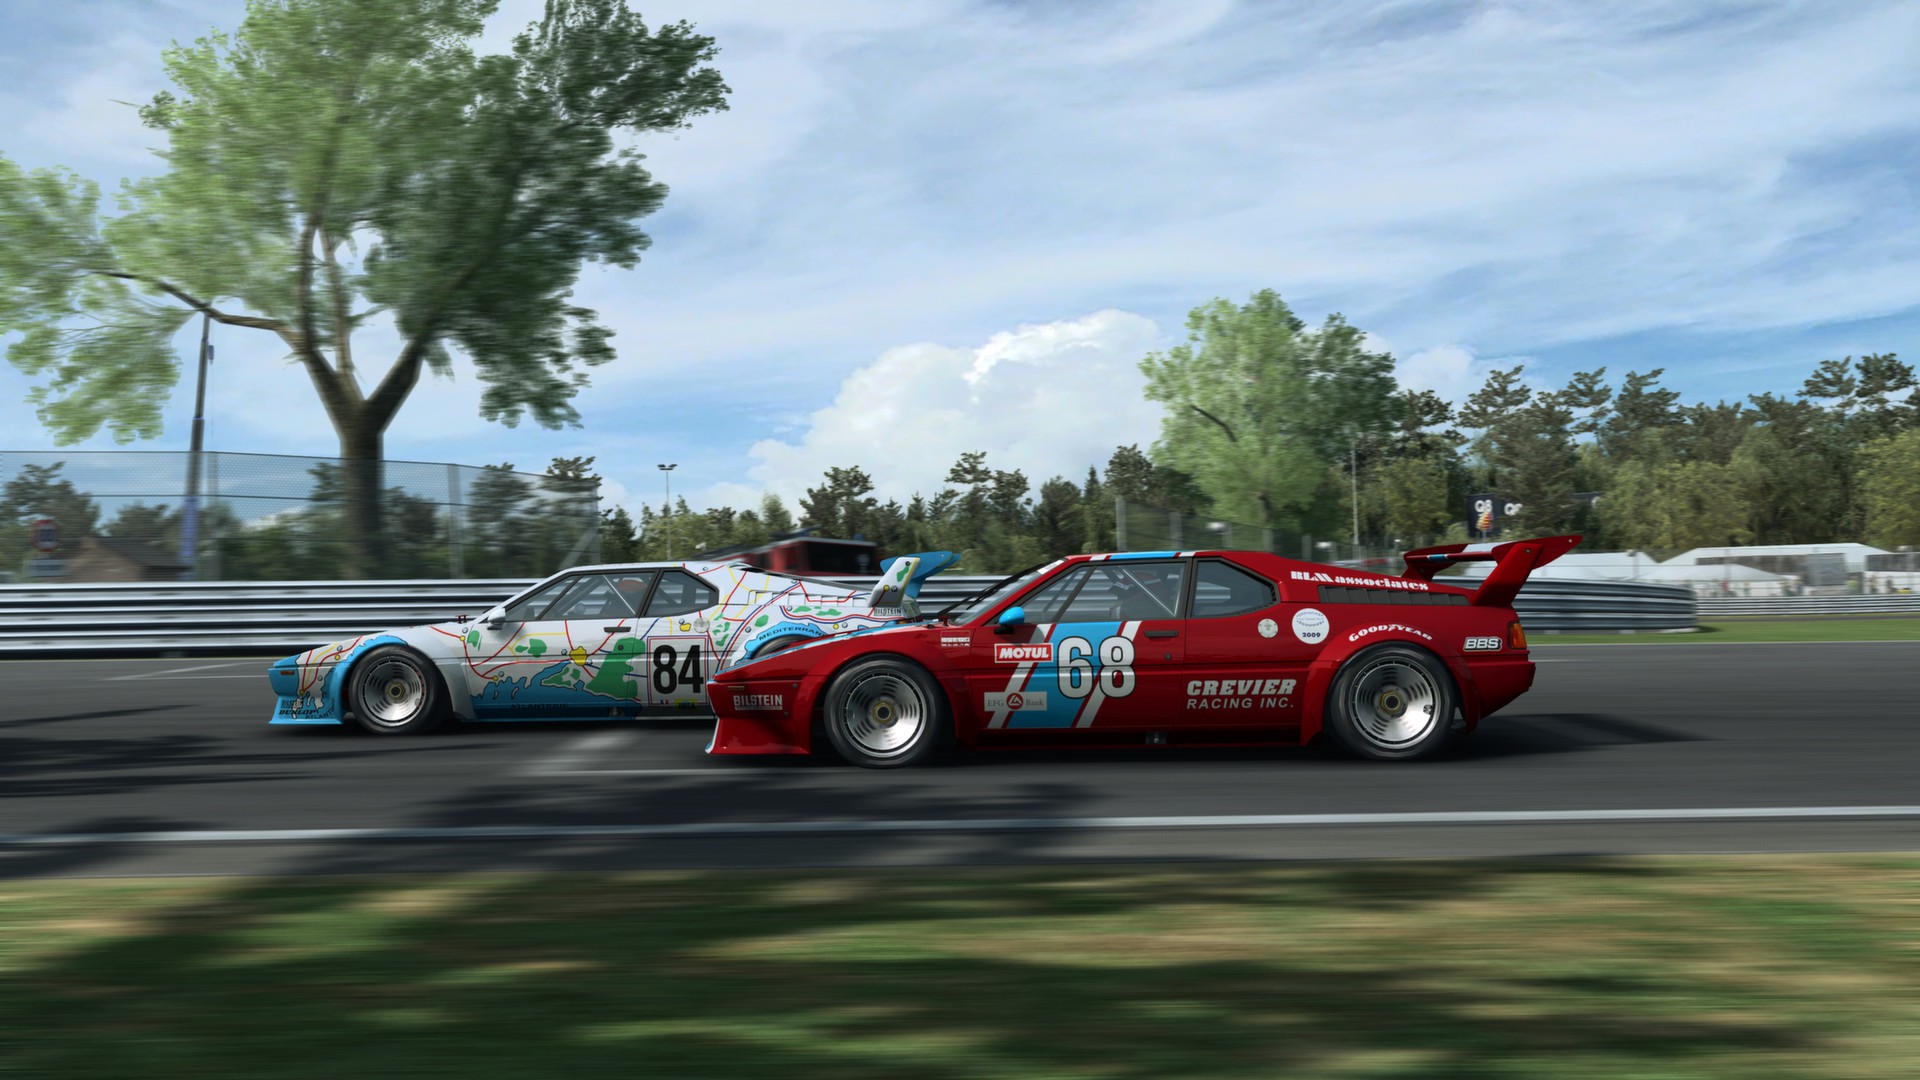 raceroom racing experience gameplay pc